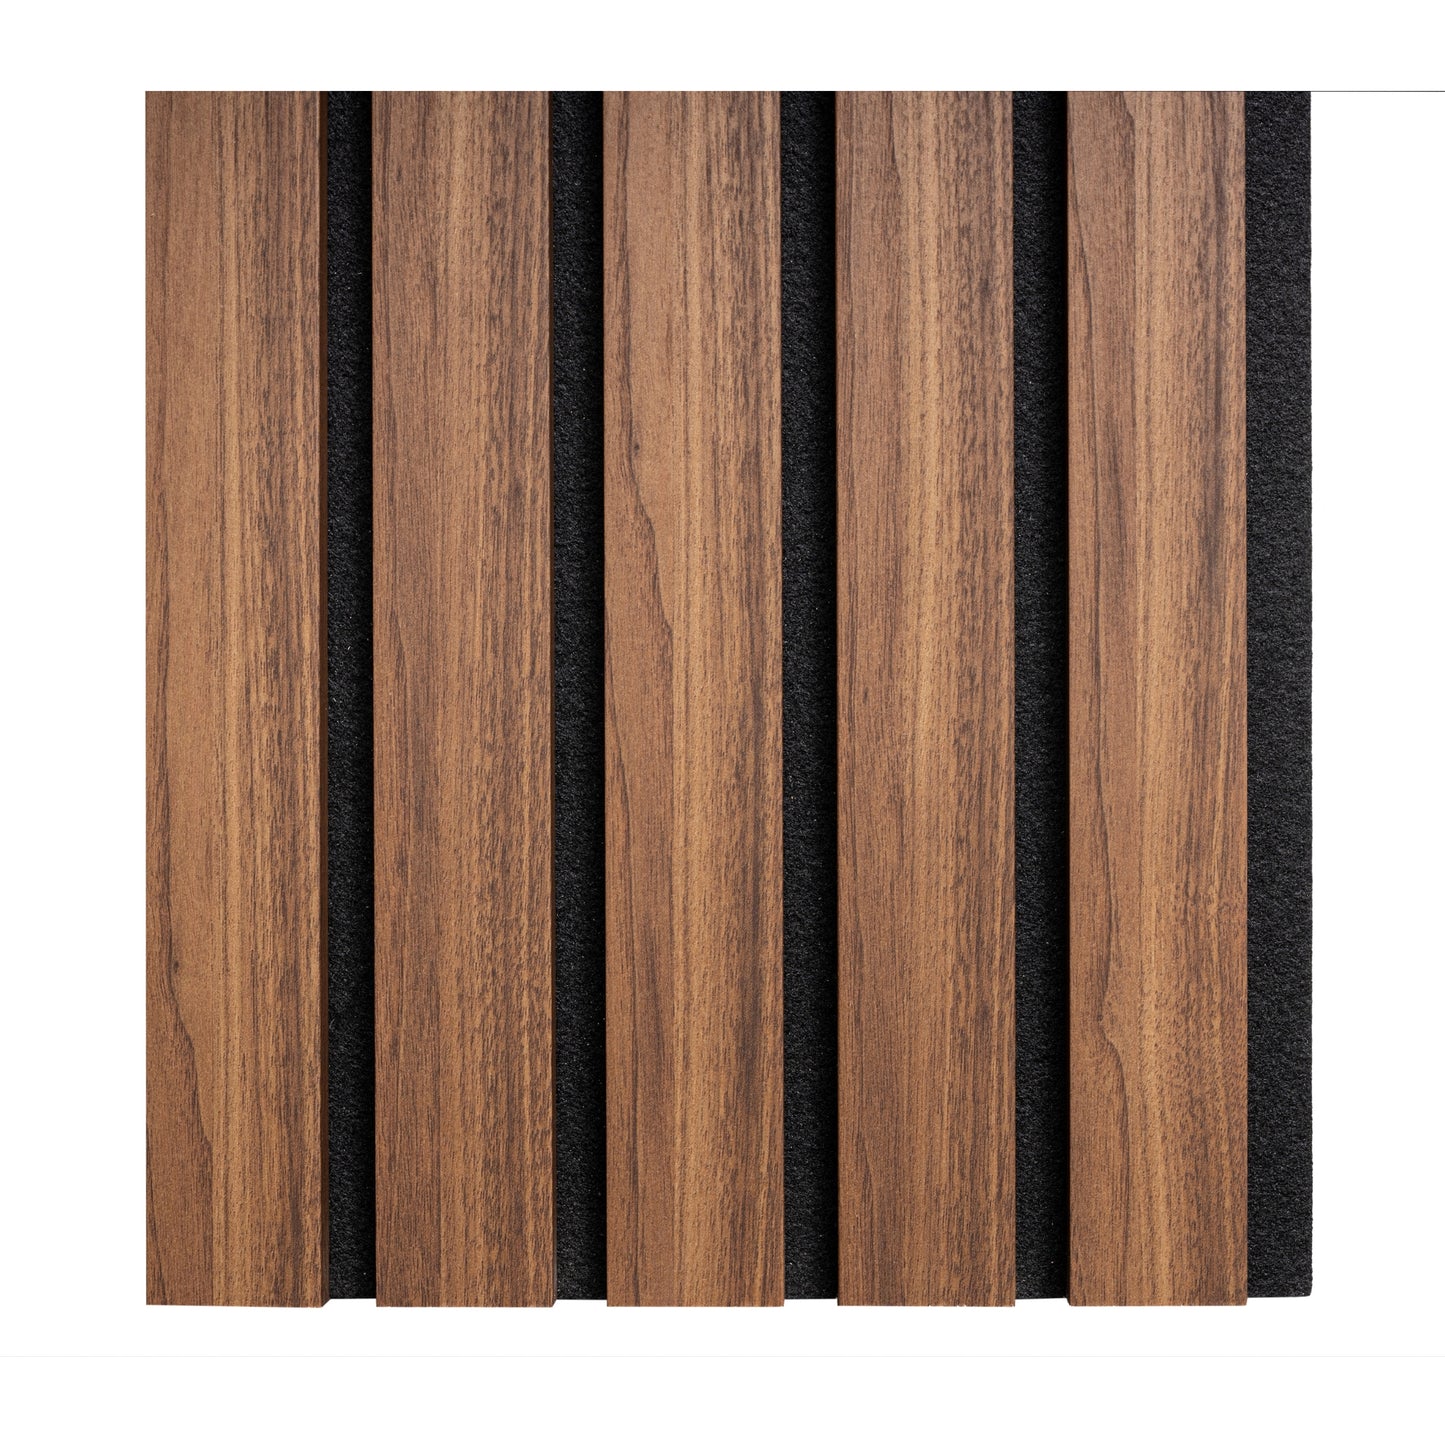 Walnut Premium Acoustic Wood Wall Panel Sample